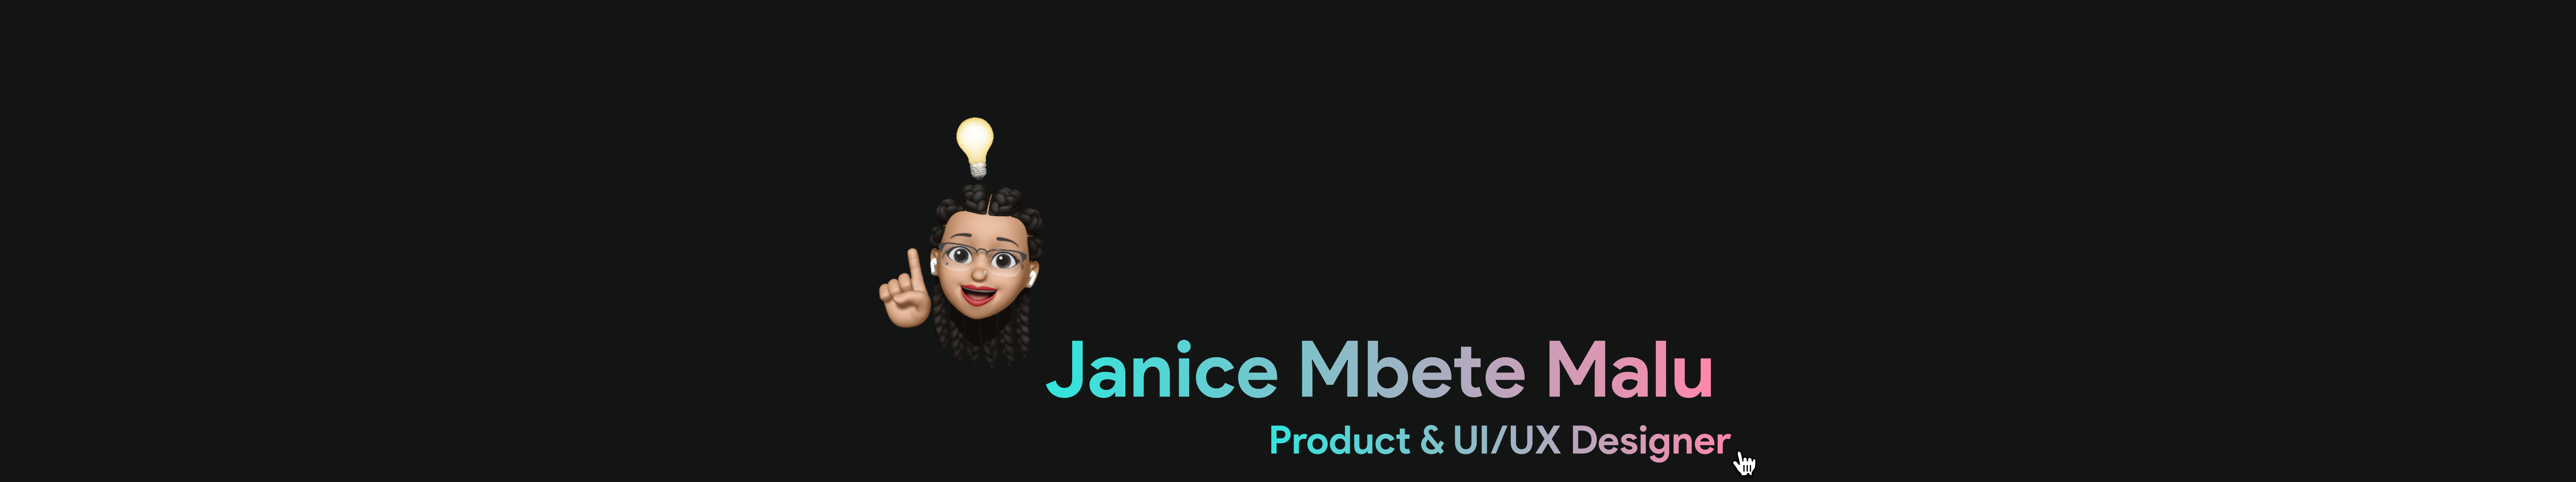 Mbete Malu's profile banner